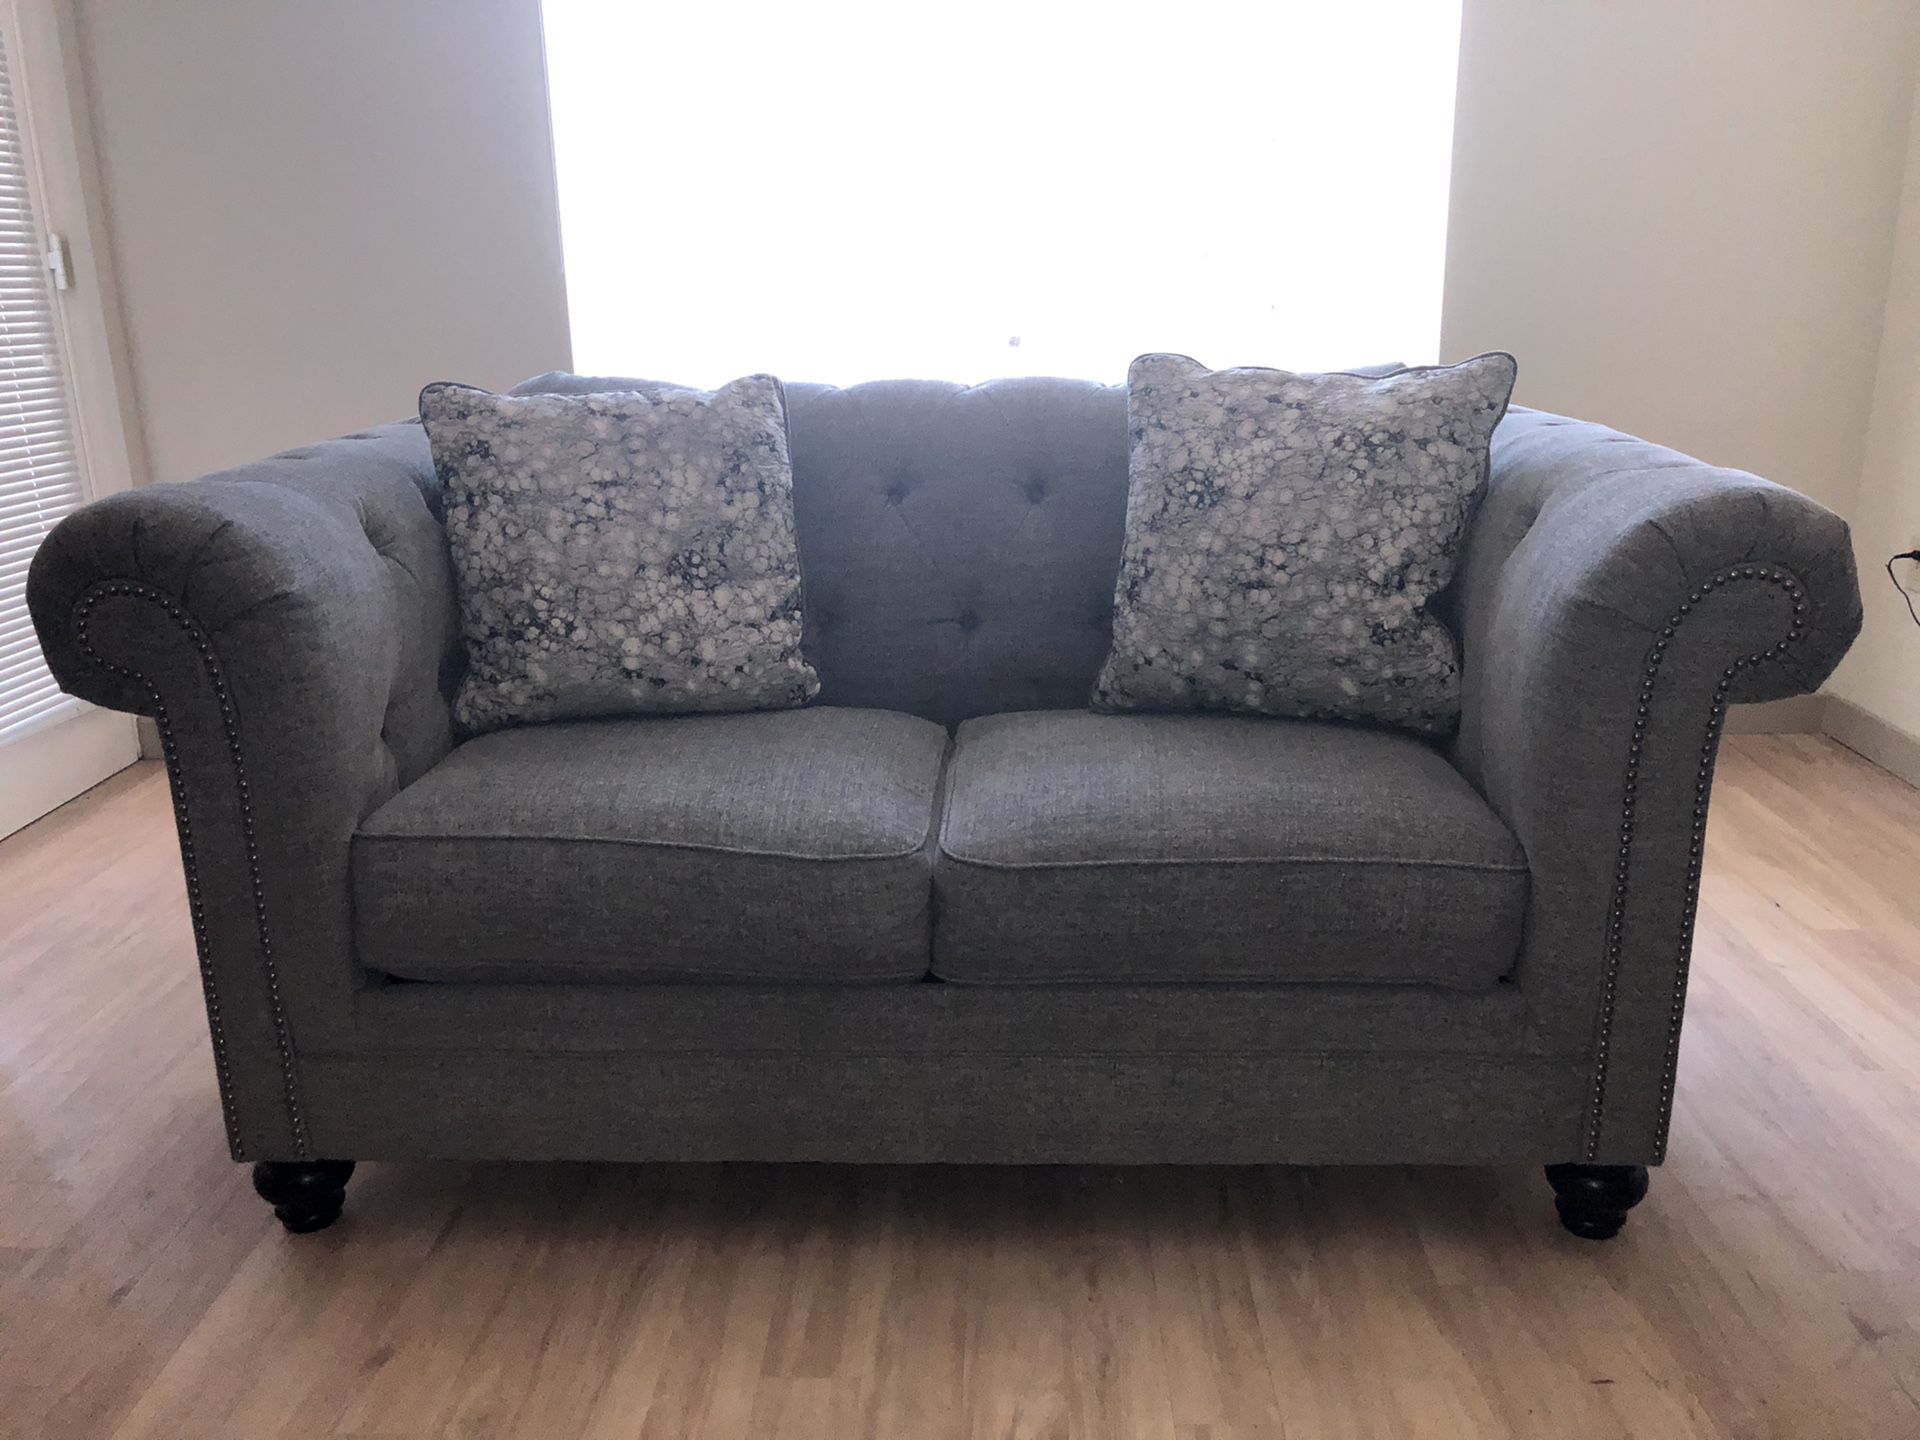 Tufted grey sofa & loveseat set